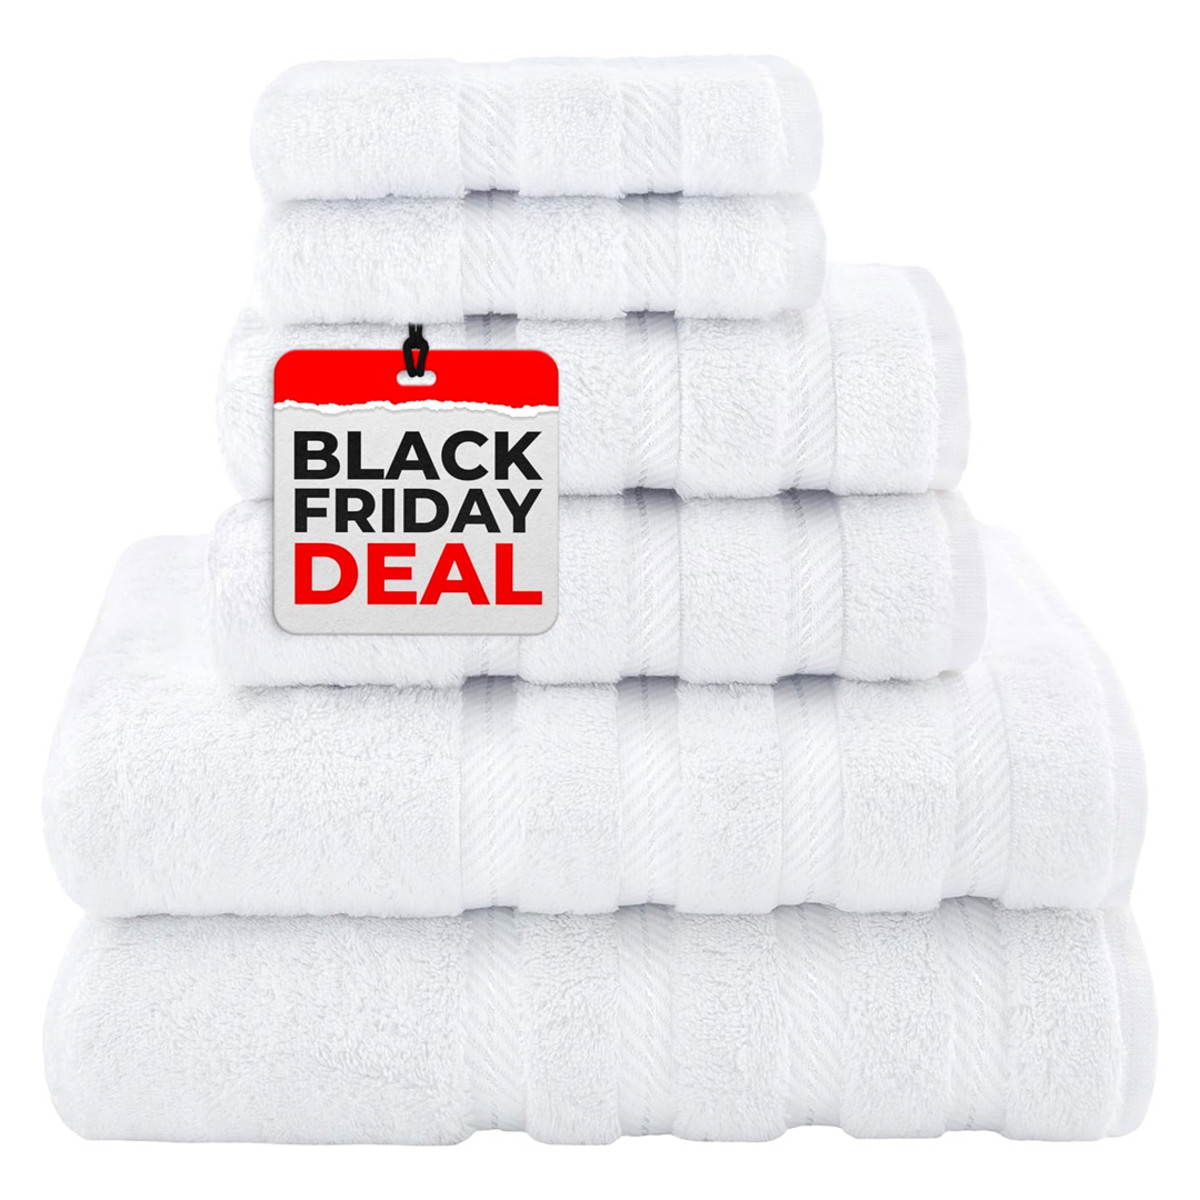 https://www.thestreet.com/.image/t_share/MjAyNDQ3NDU4MjA1MTgwOTk2/american-soft-linen-luxury-6-piece-towel-set.jpg